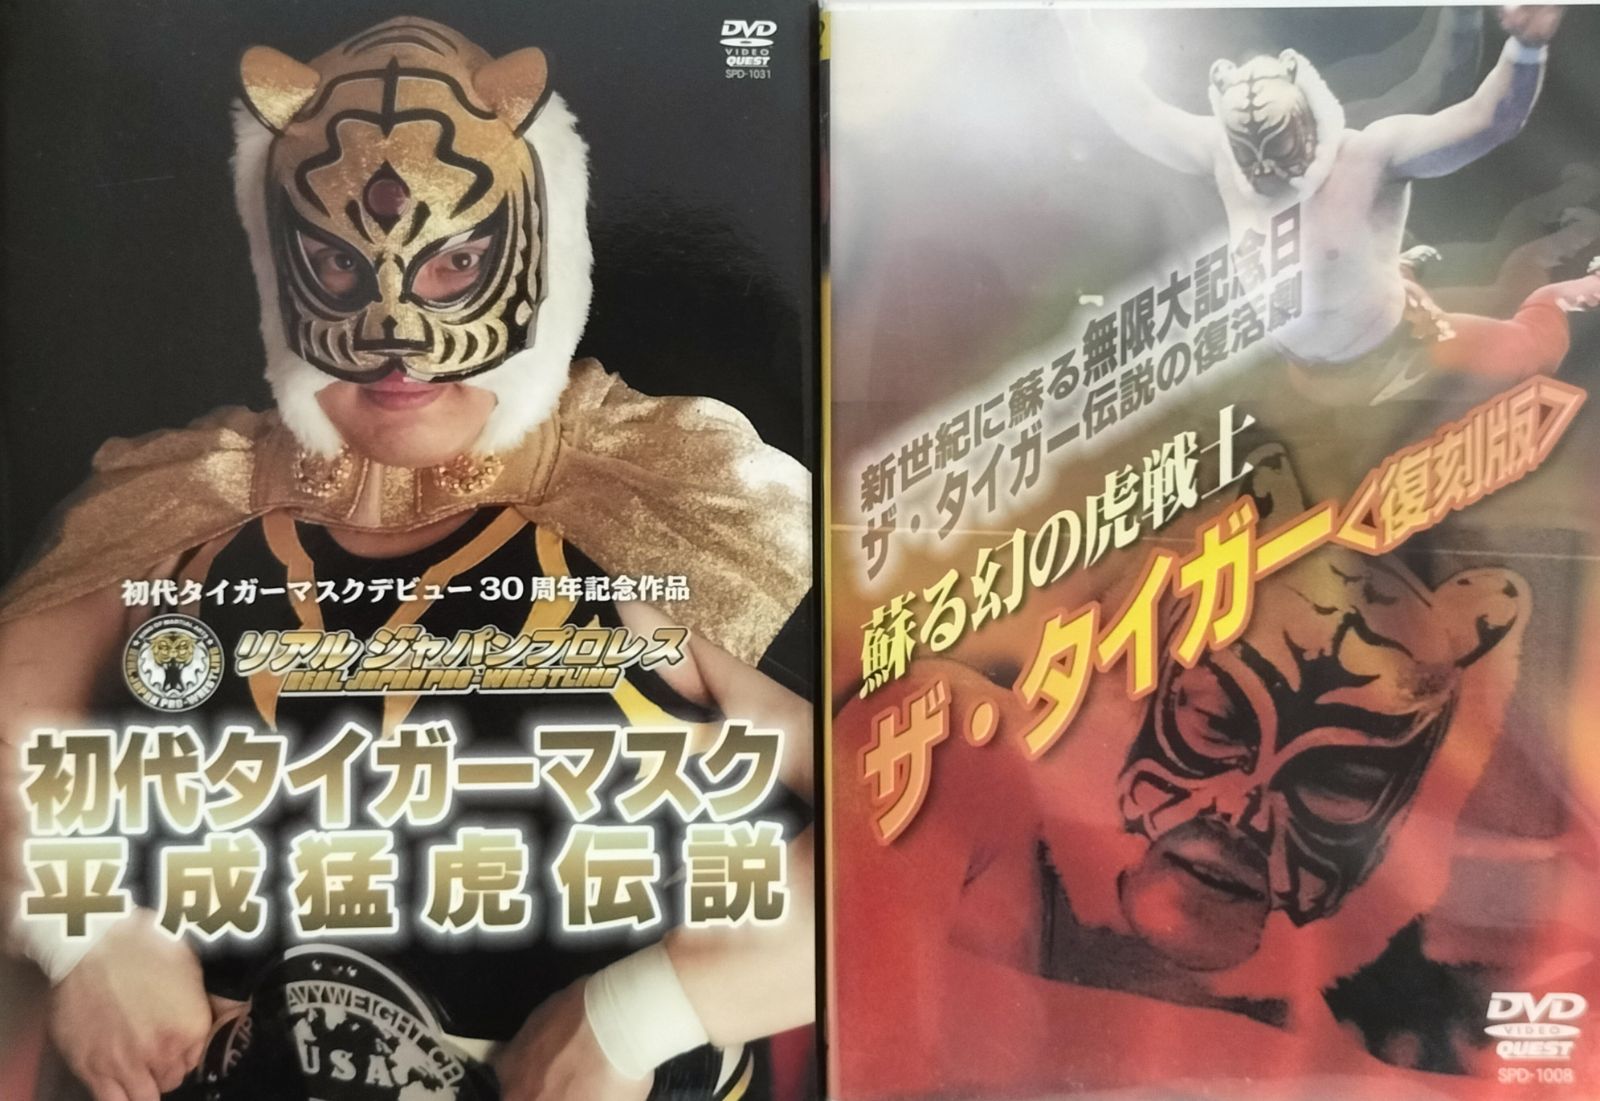 DVD スポーツ 初代タイガーマスク 平成猛虎伝説 - スポーツ・フィットネス